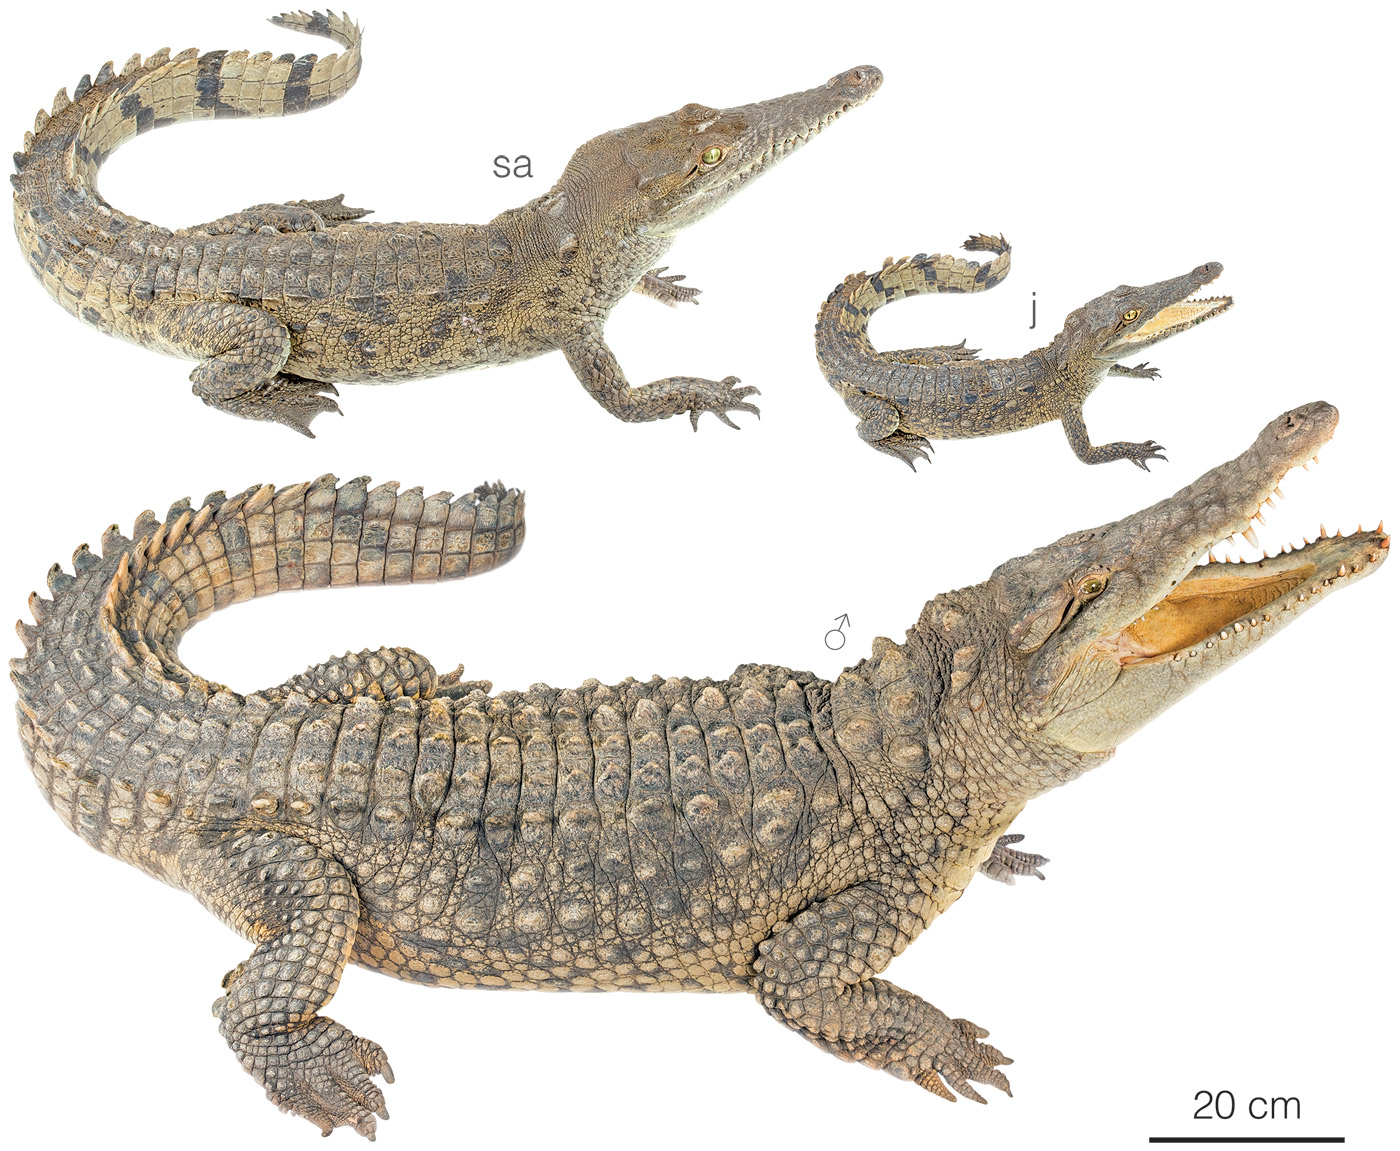 Figure showing variation between individuals of Crocodylus acutus